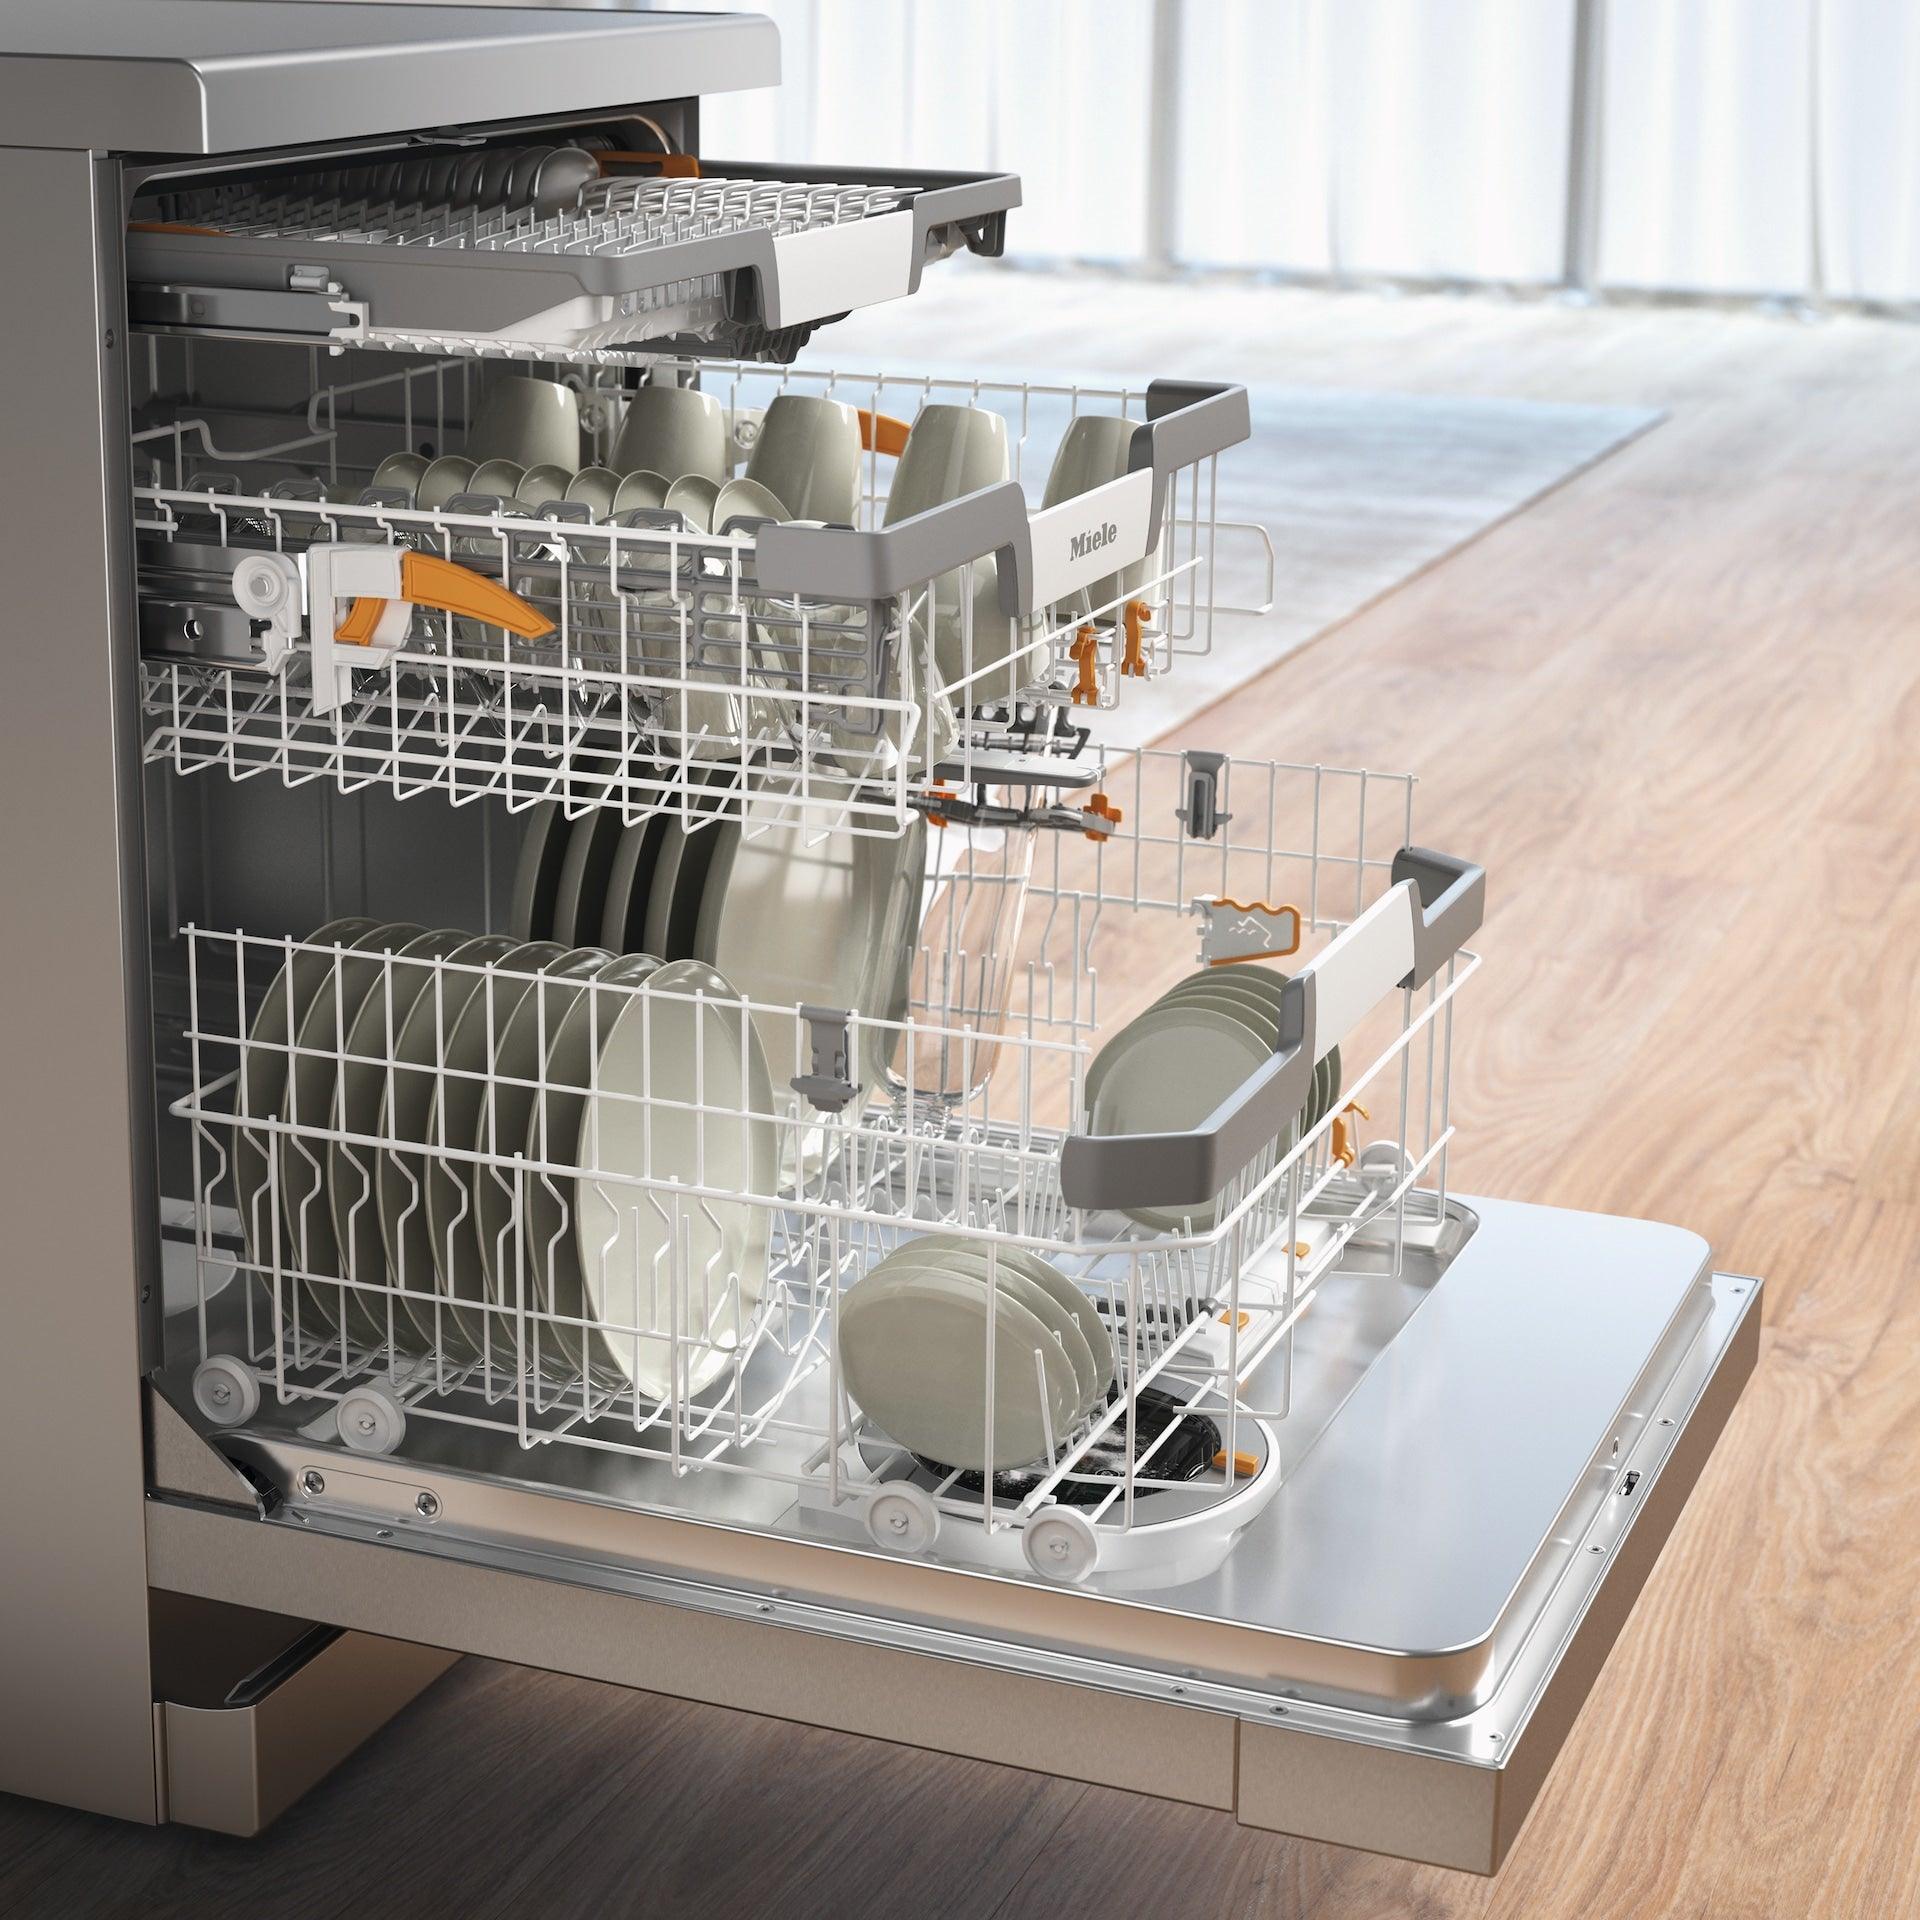 Miele Free-Standing Dishwashers G7130 SC - Posh Import